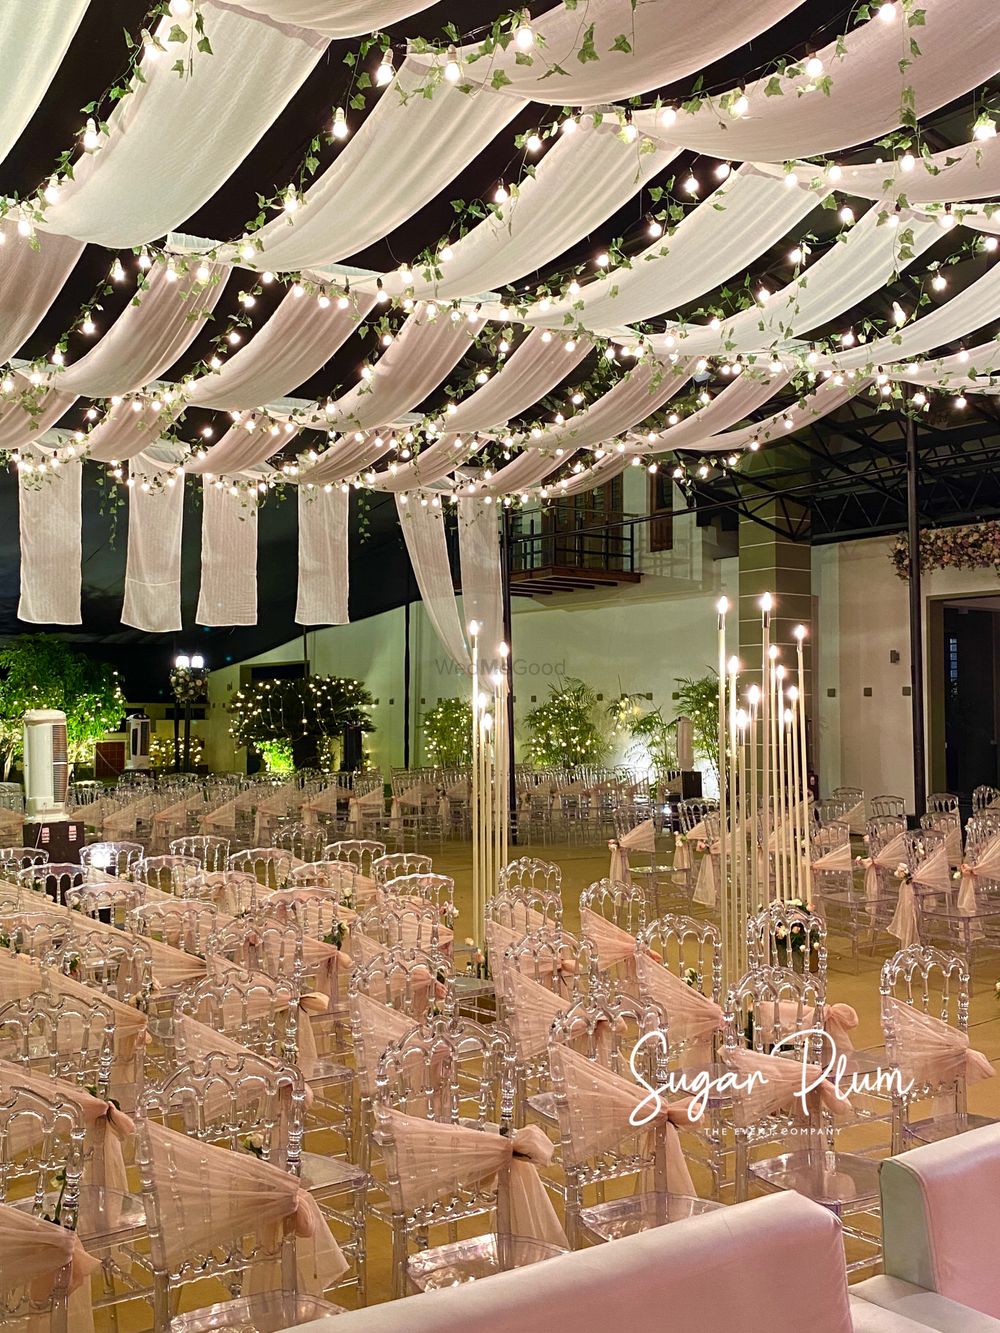 Photo By Sugarplum Event Company - Wedding Planners